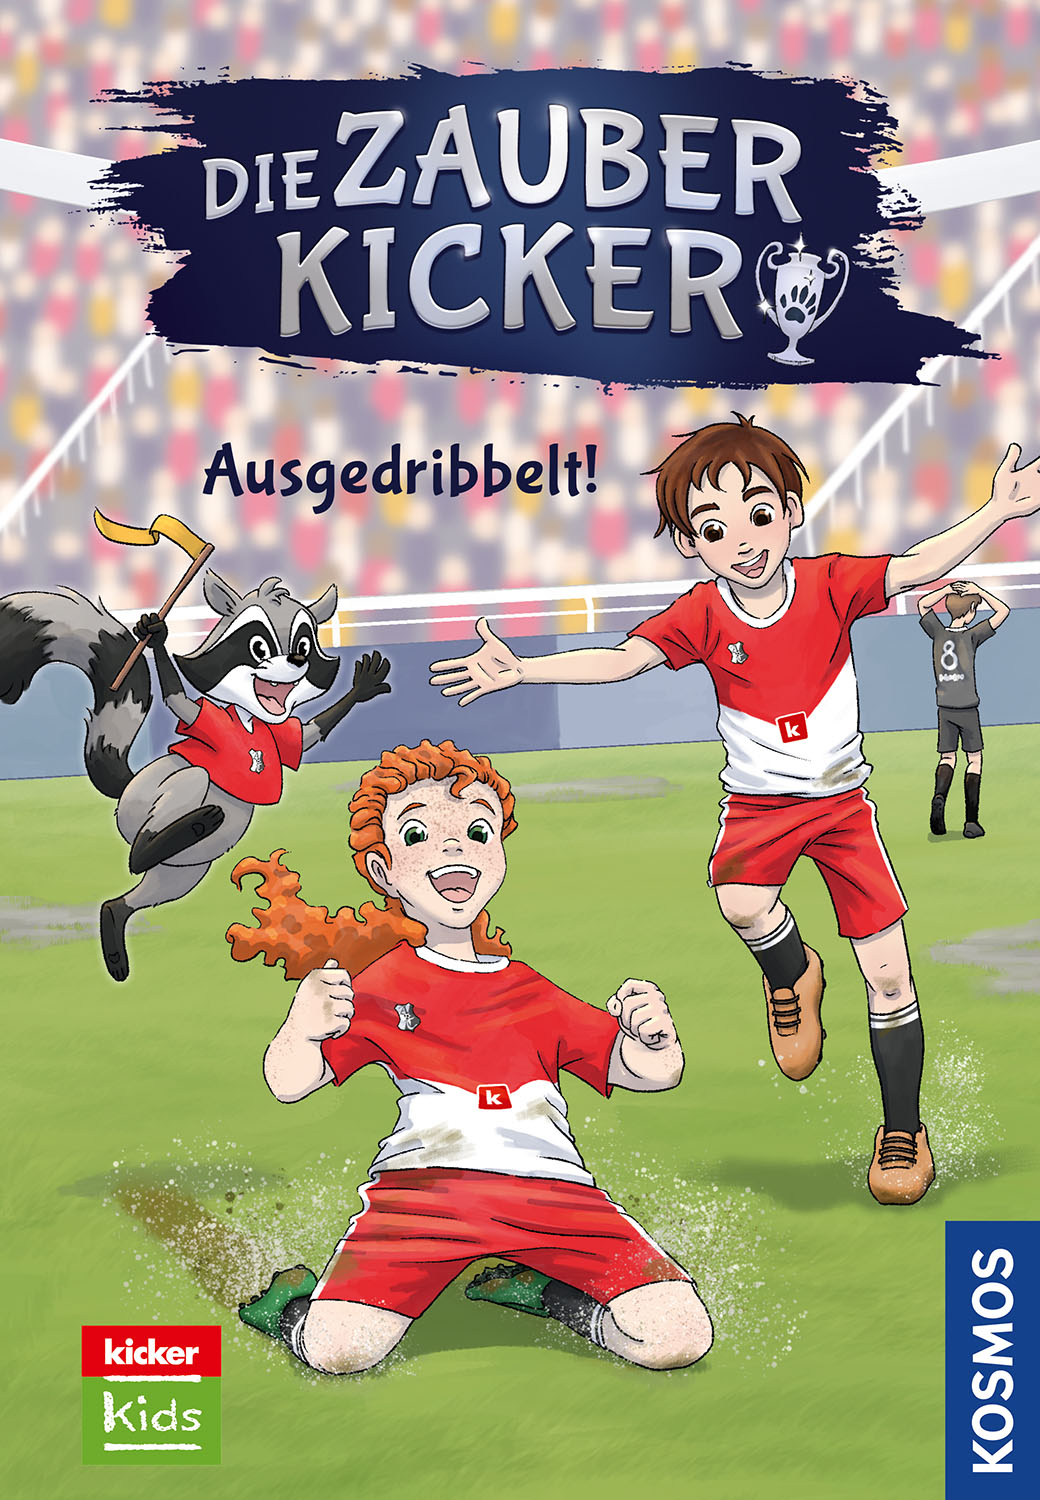 kicker Kids Buch Ausgedribbelt